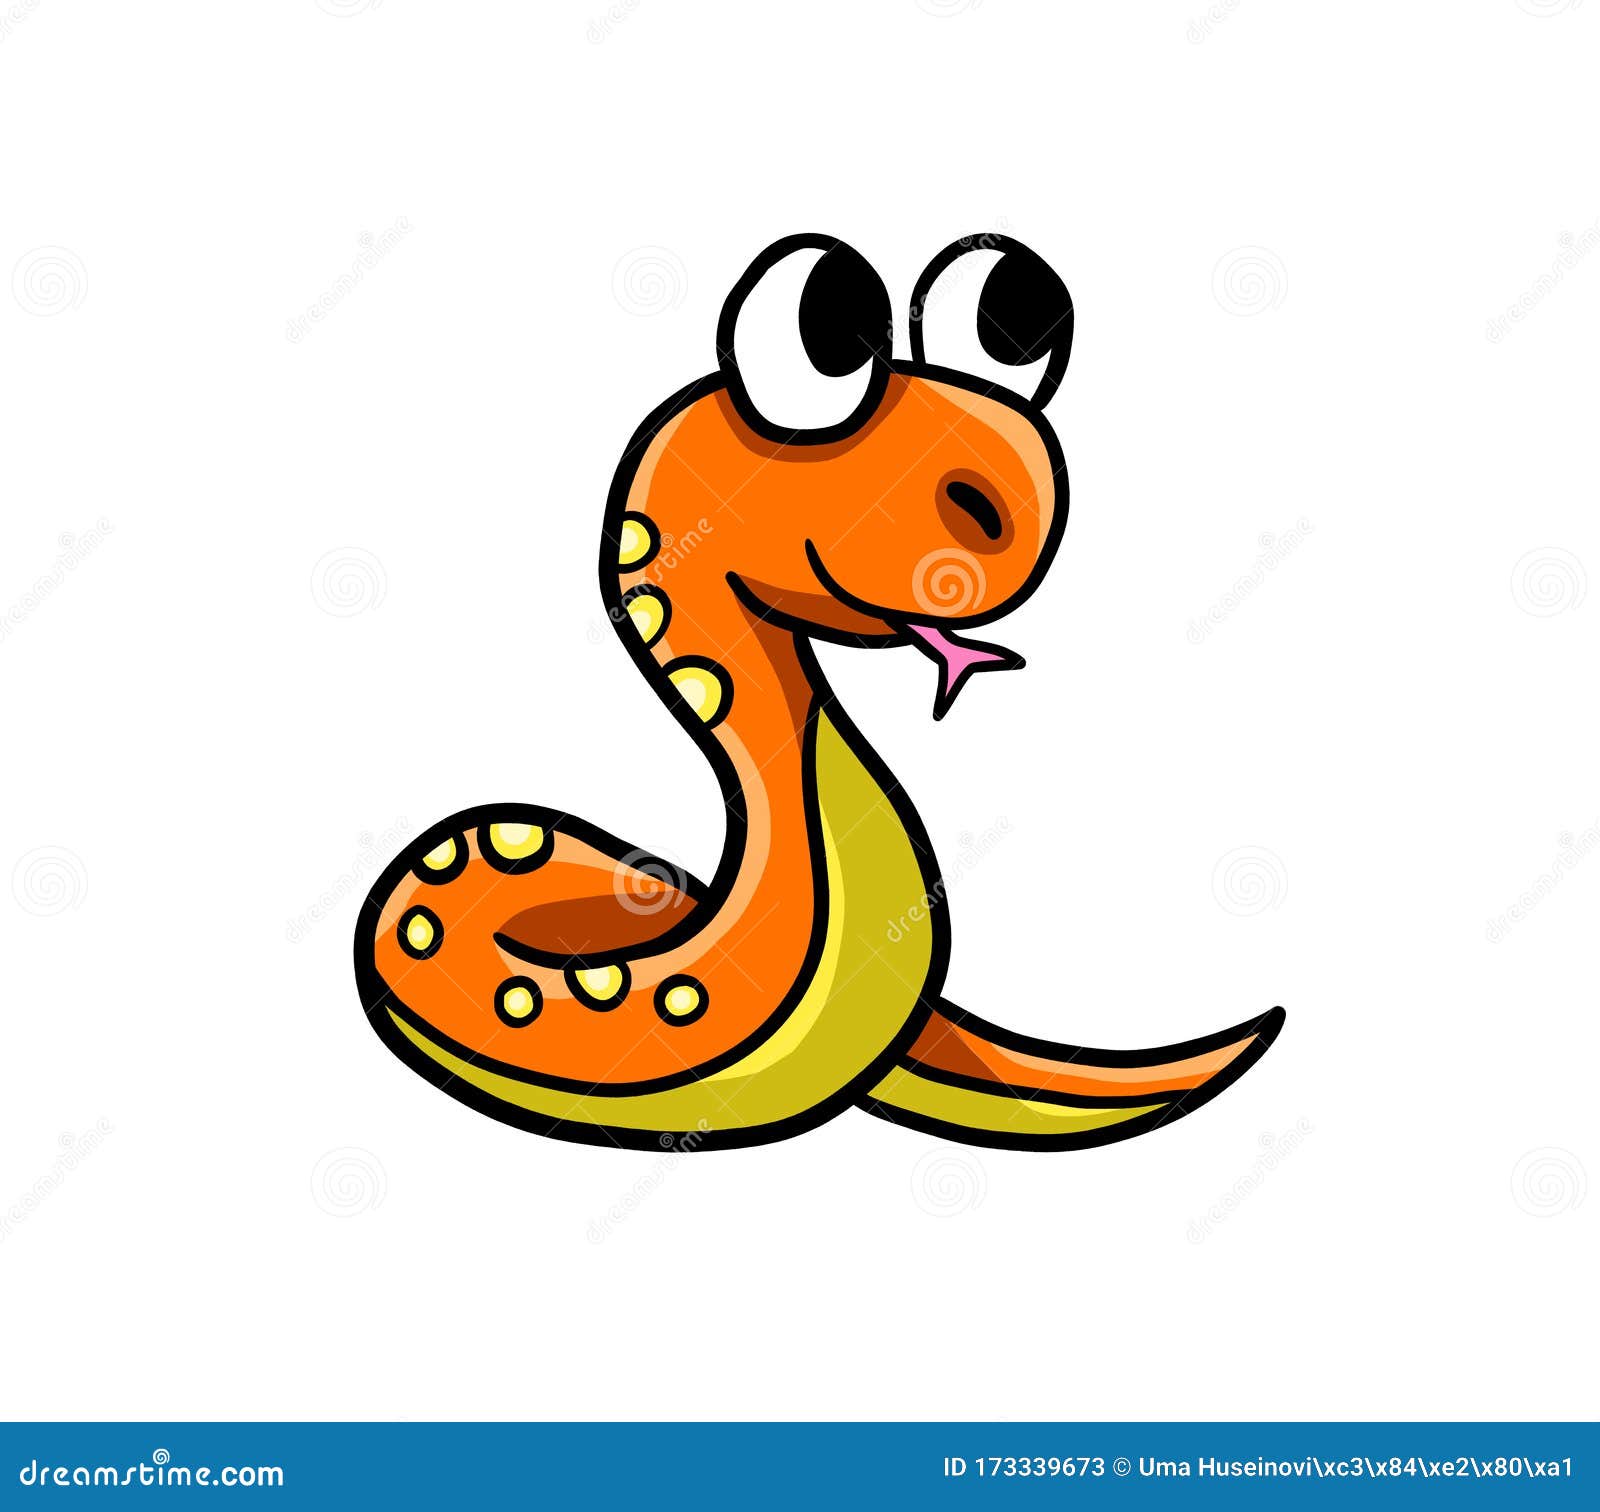 A very adorable orange snake stock illustration